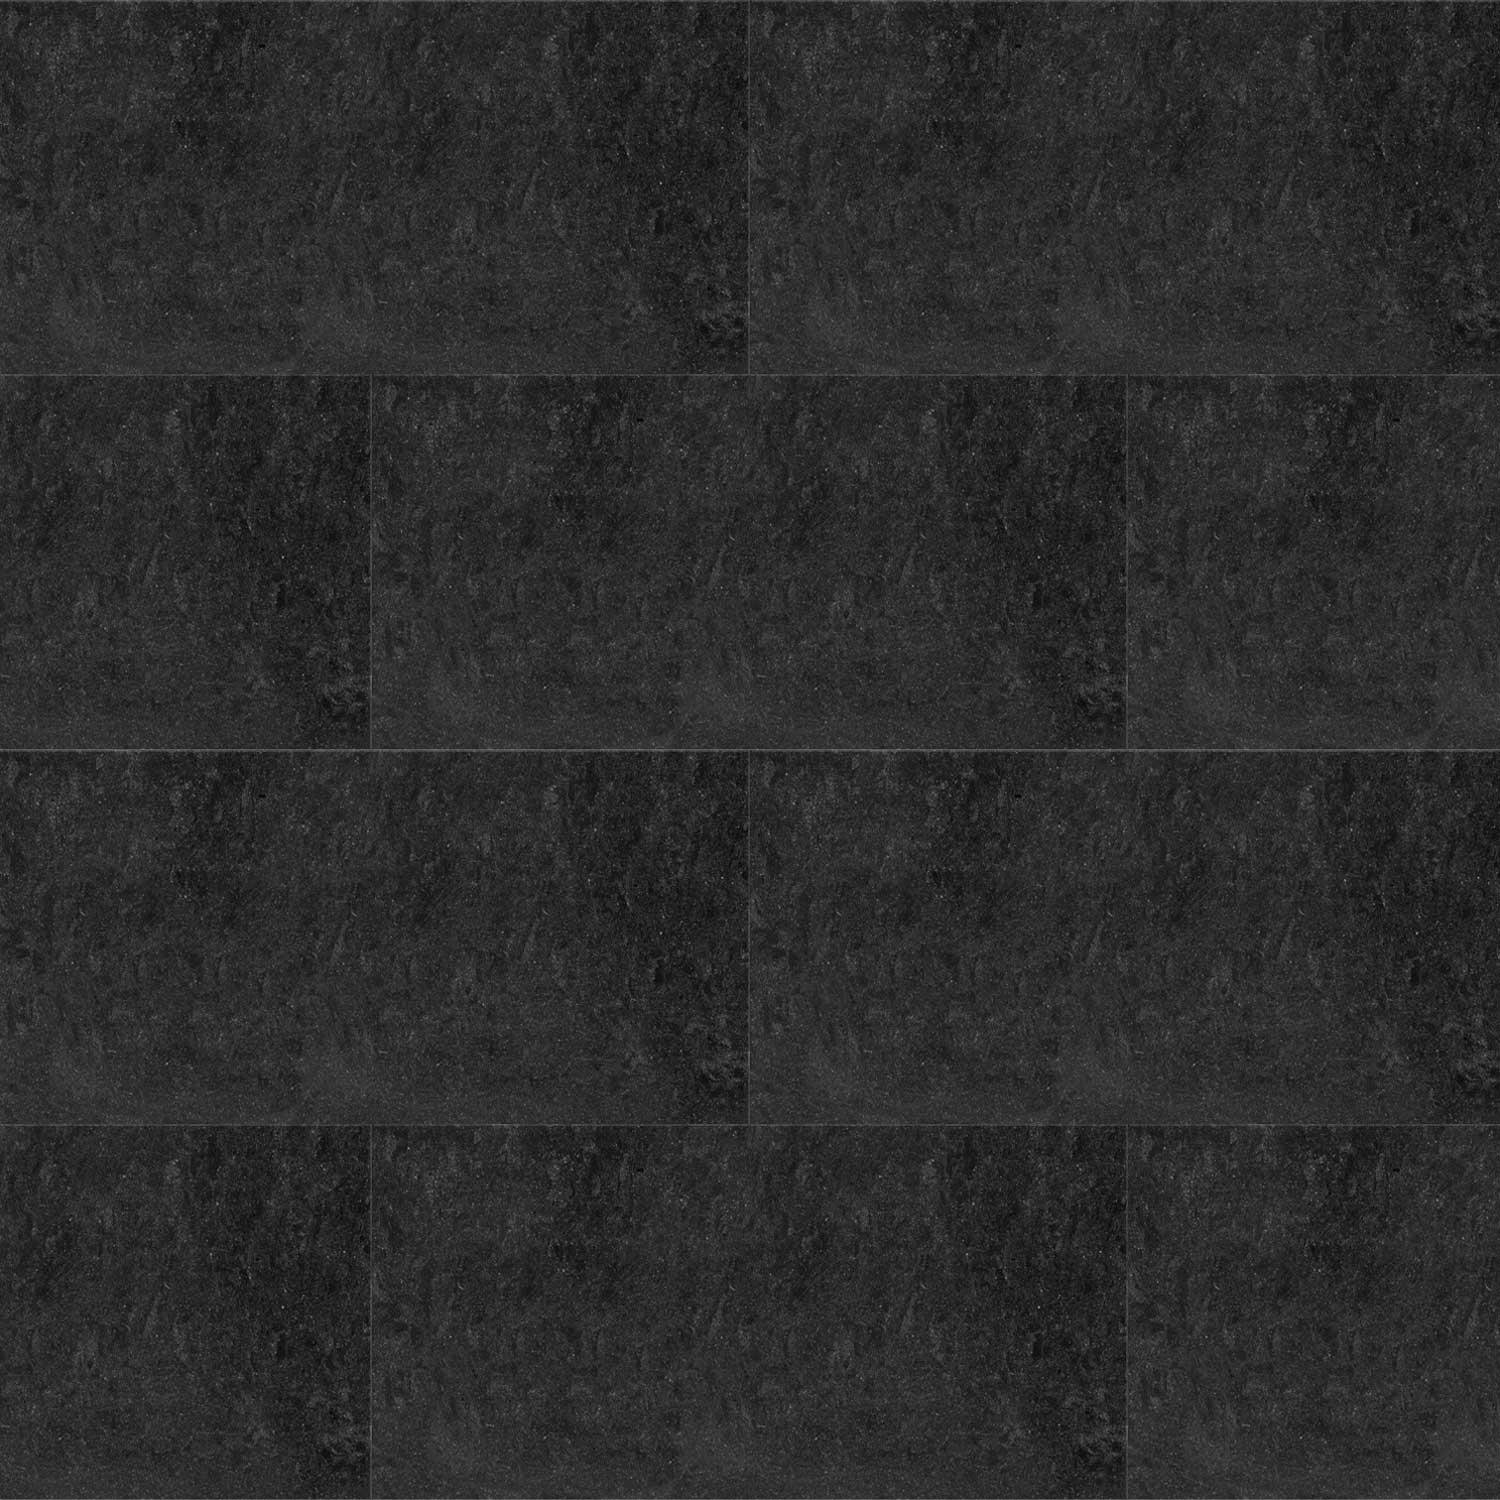 RAK Lounge Black Porcelain Tile Polished Concrete Effect 300x600mm